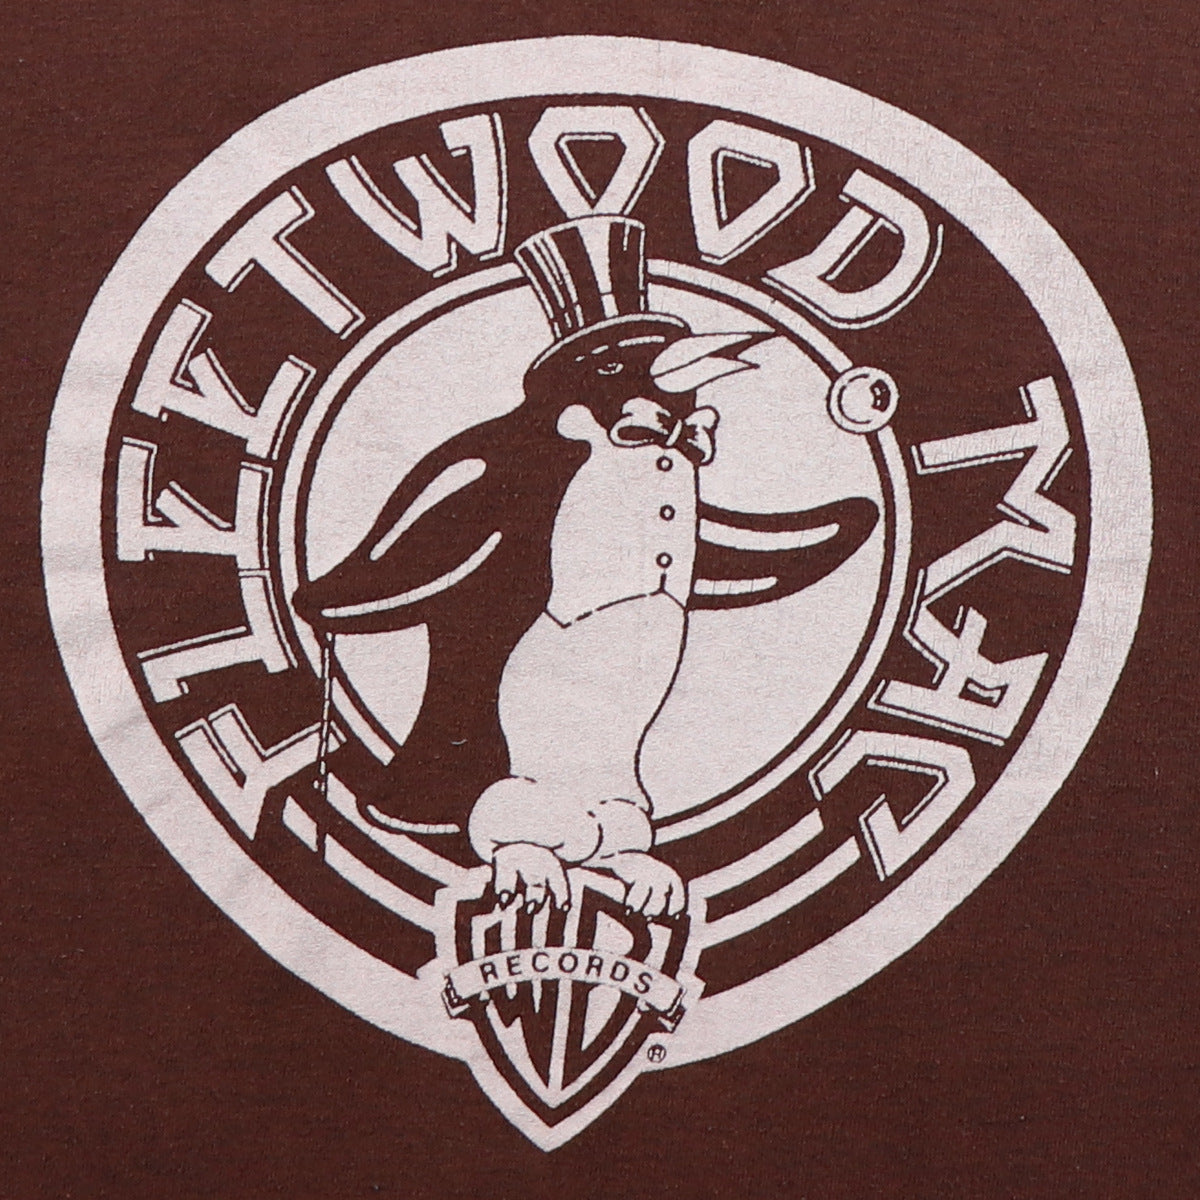 1970s Fleetwood Mac Warner Brothers Promo Shirt